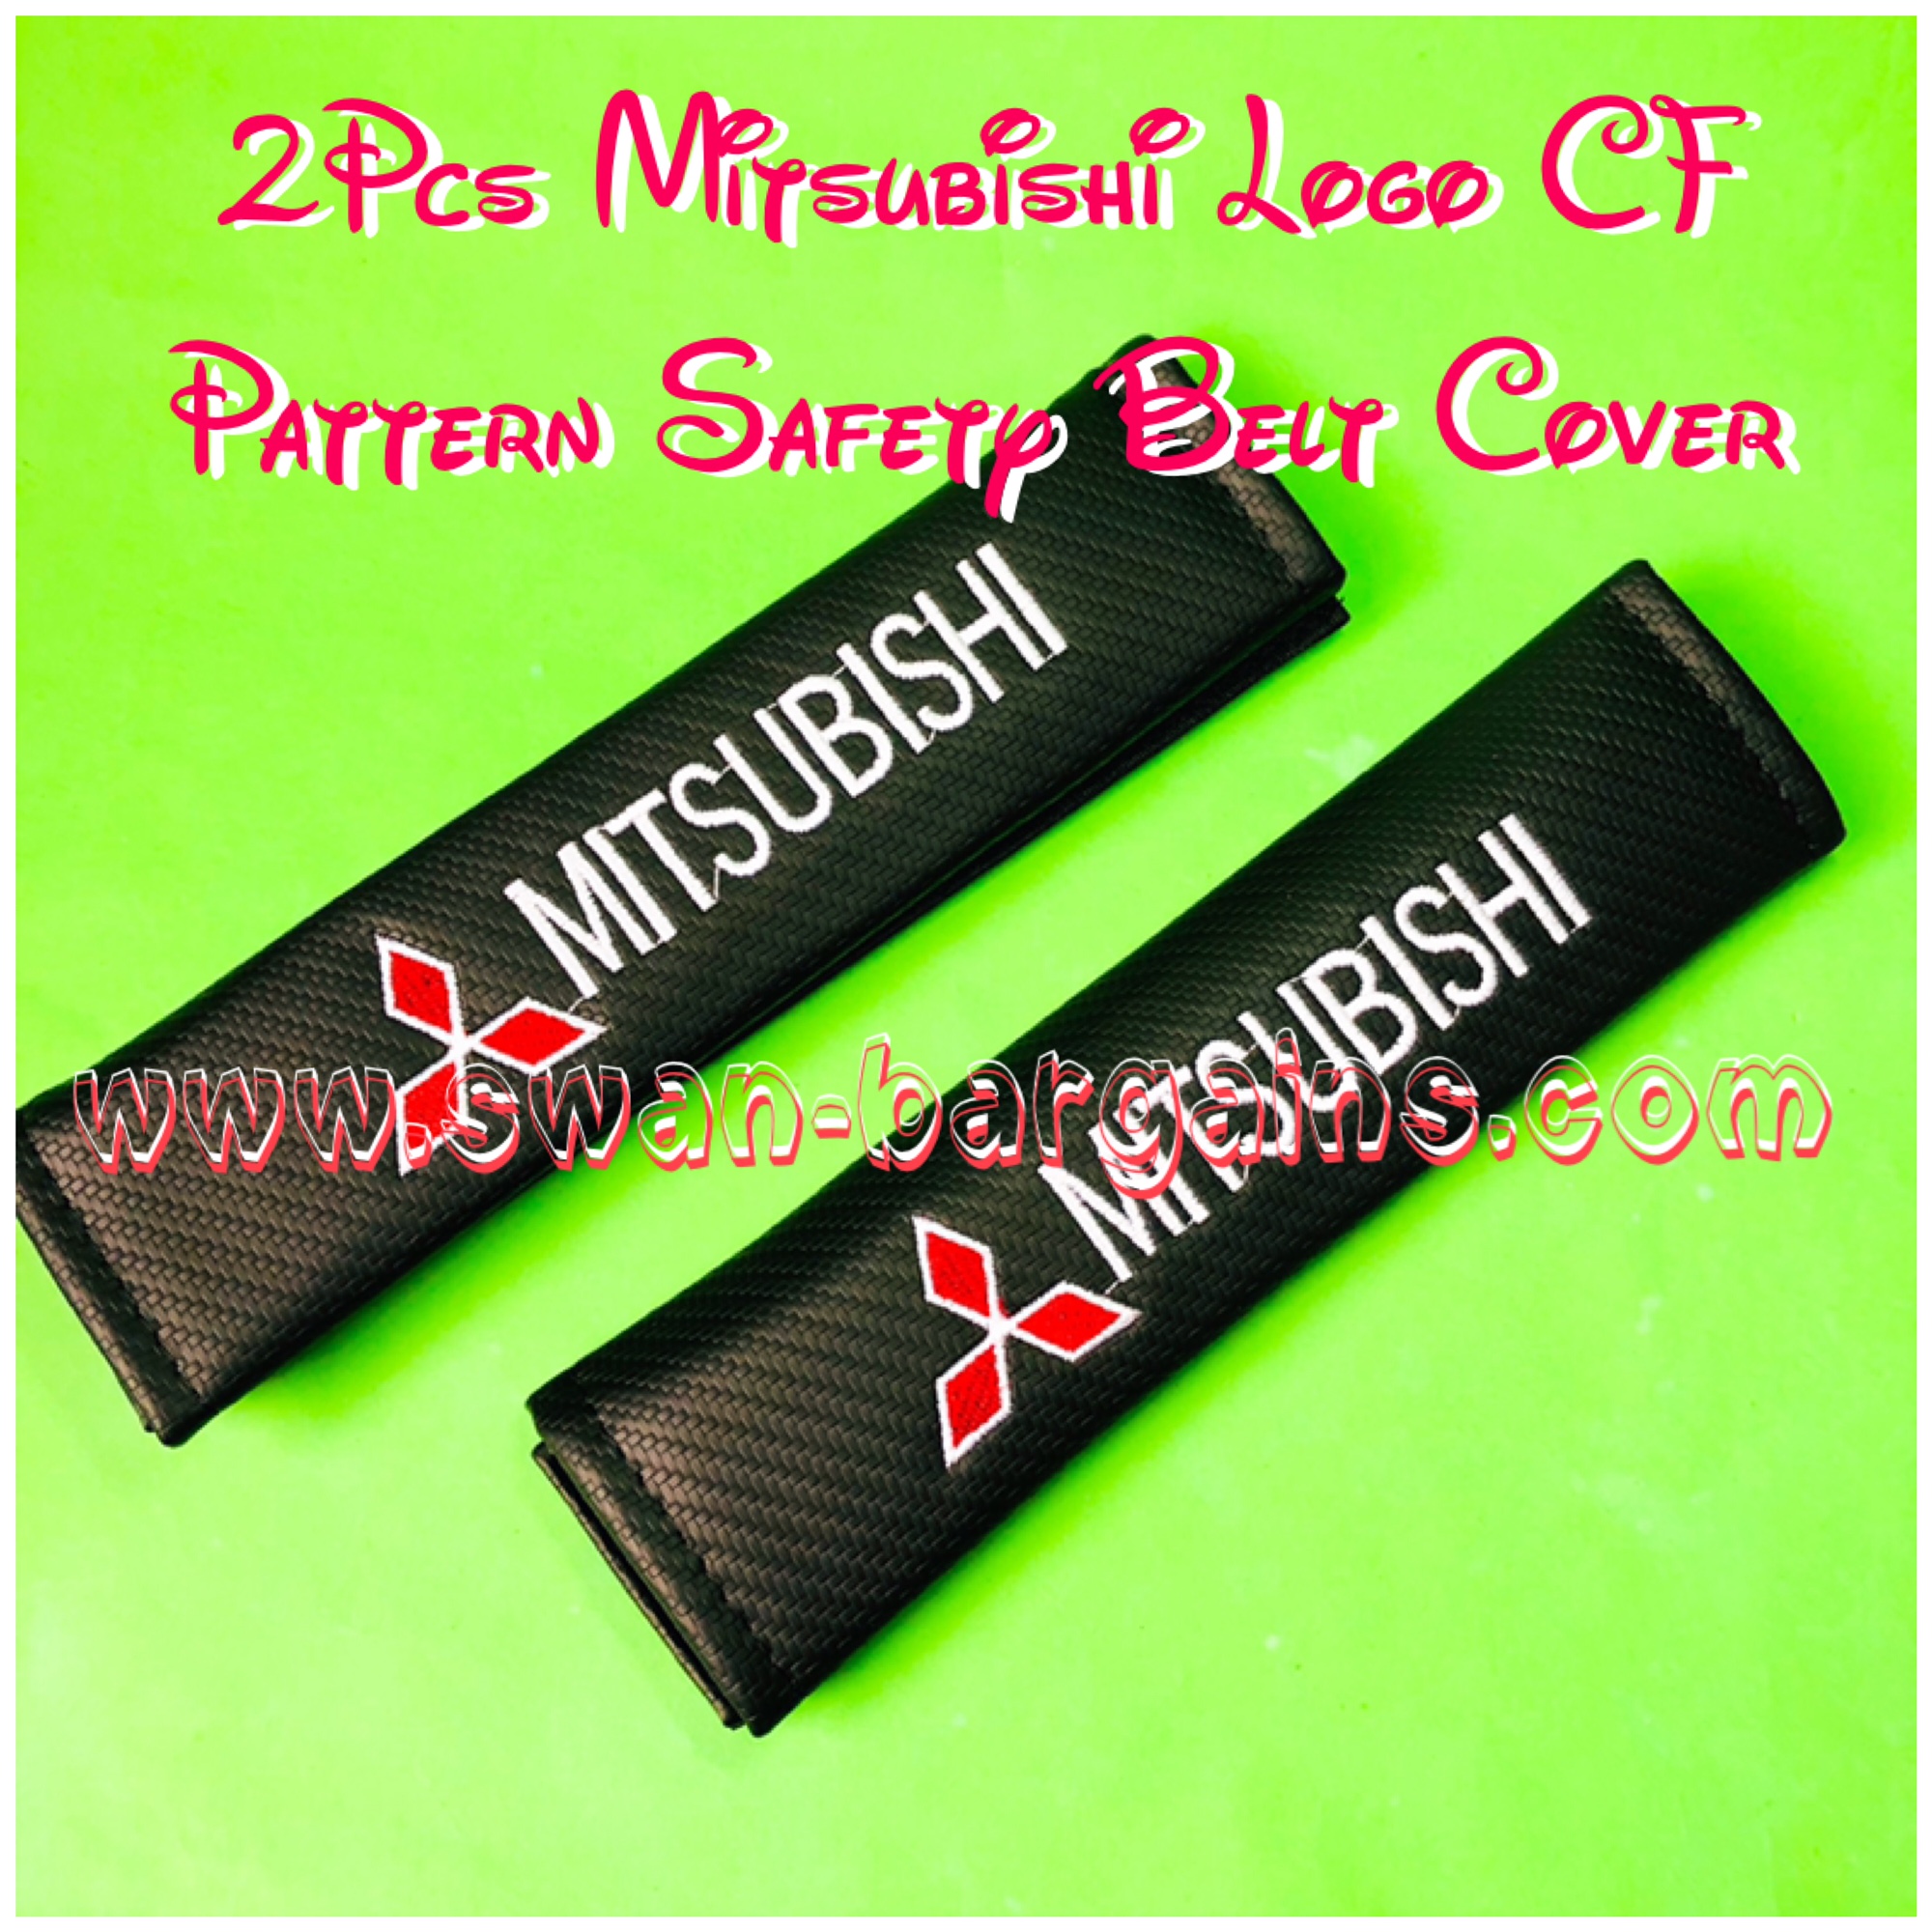 Mitsubishi Car Safety Belt Cover Set Singapore